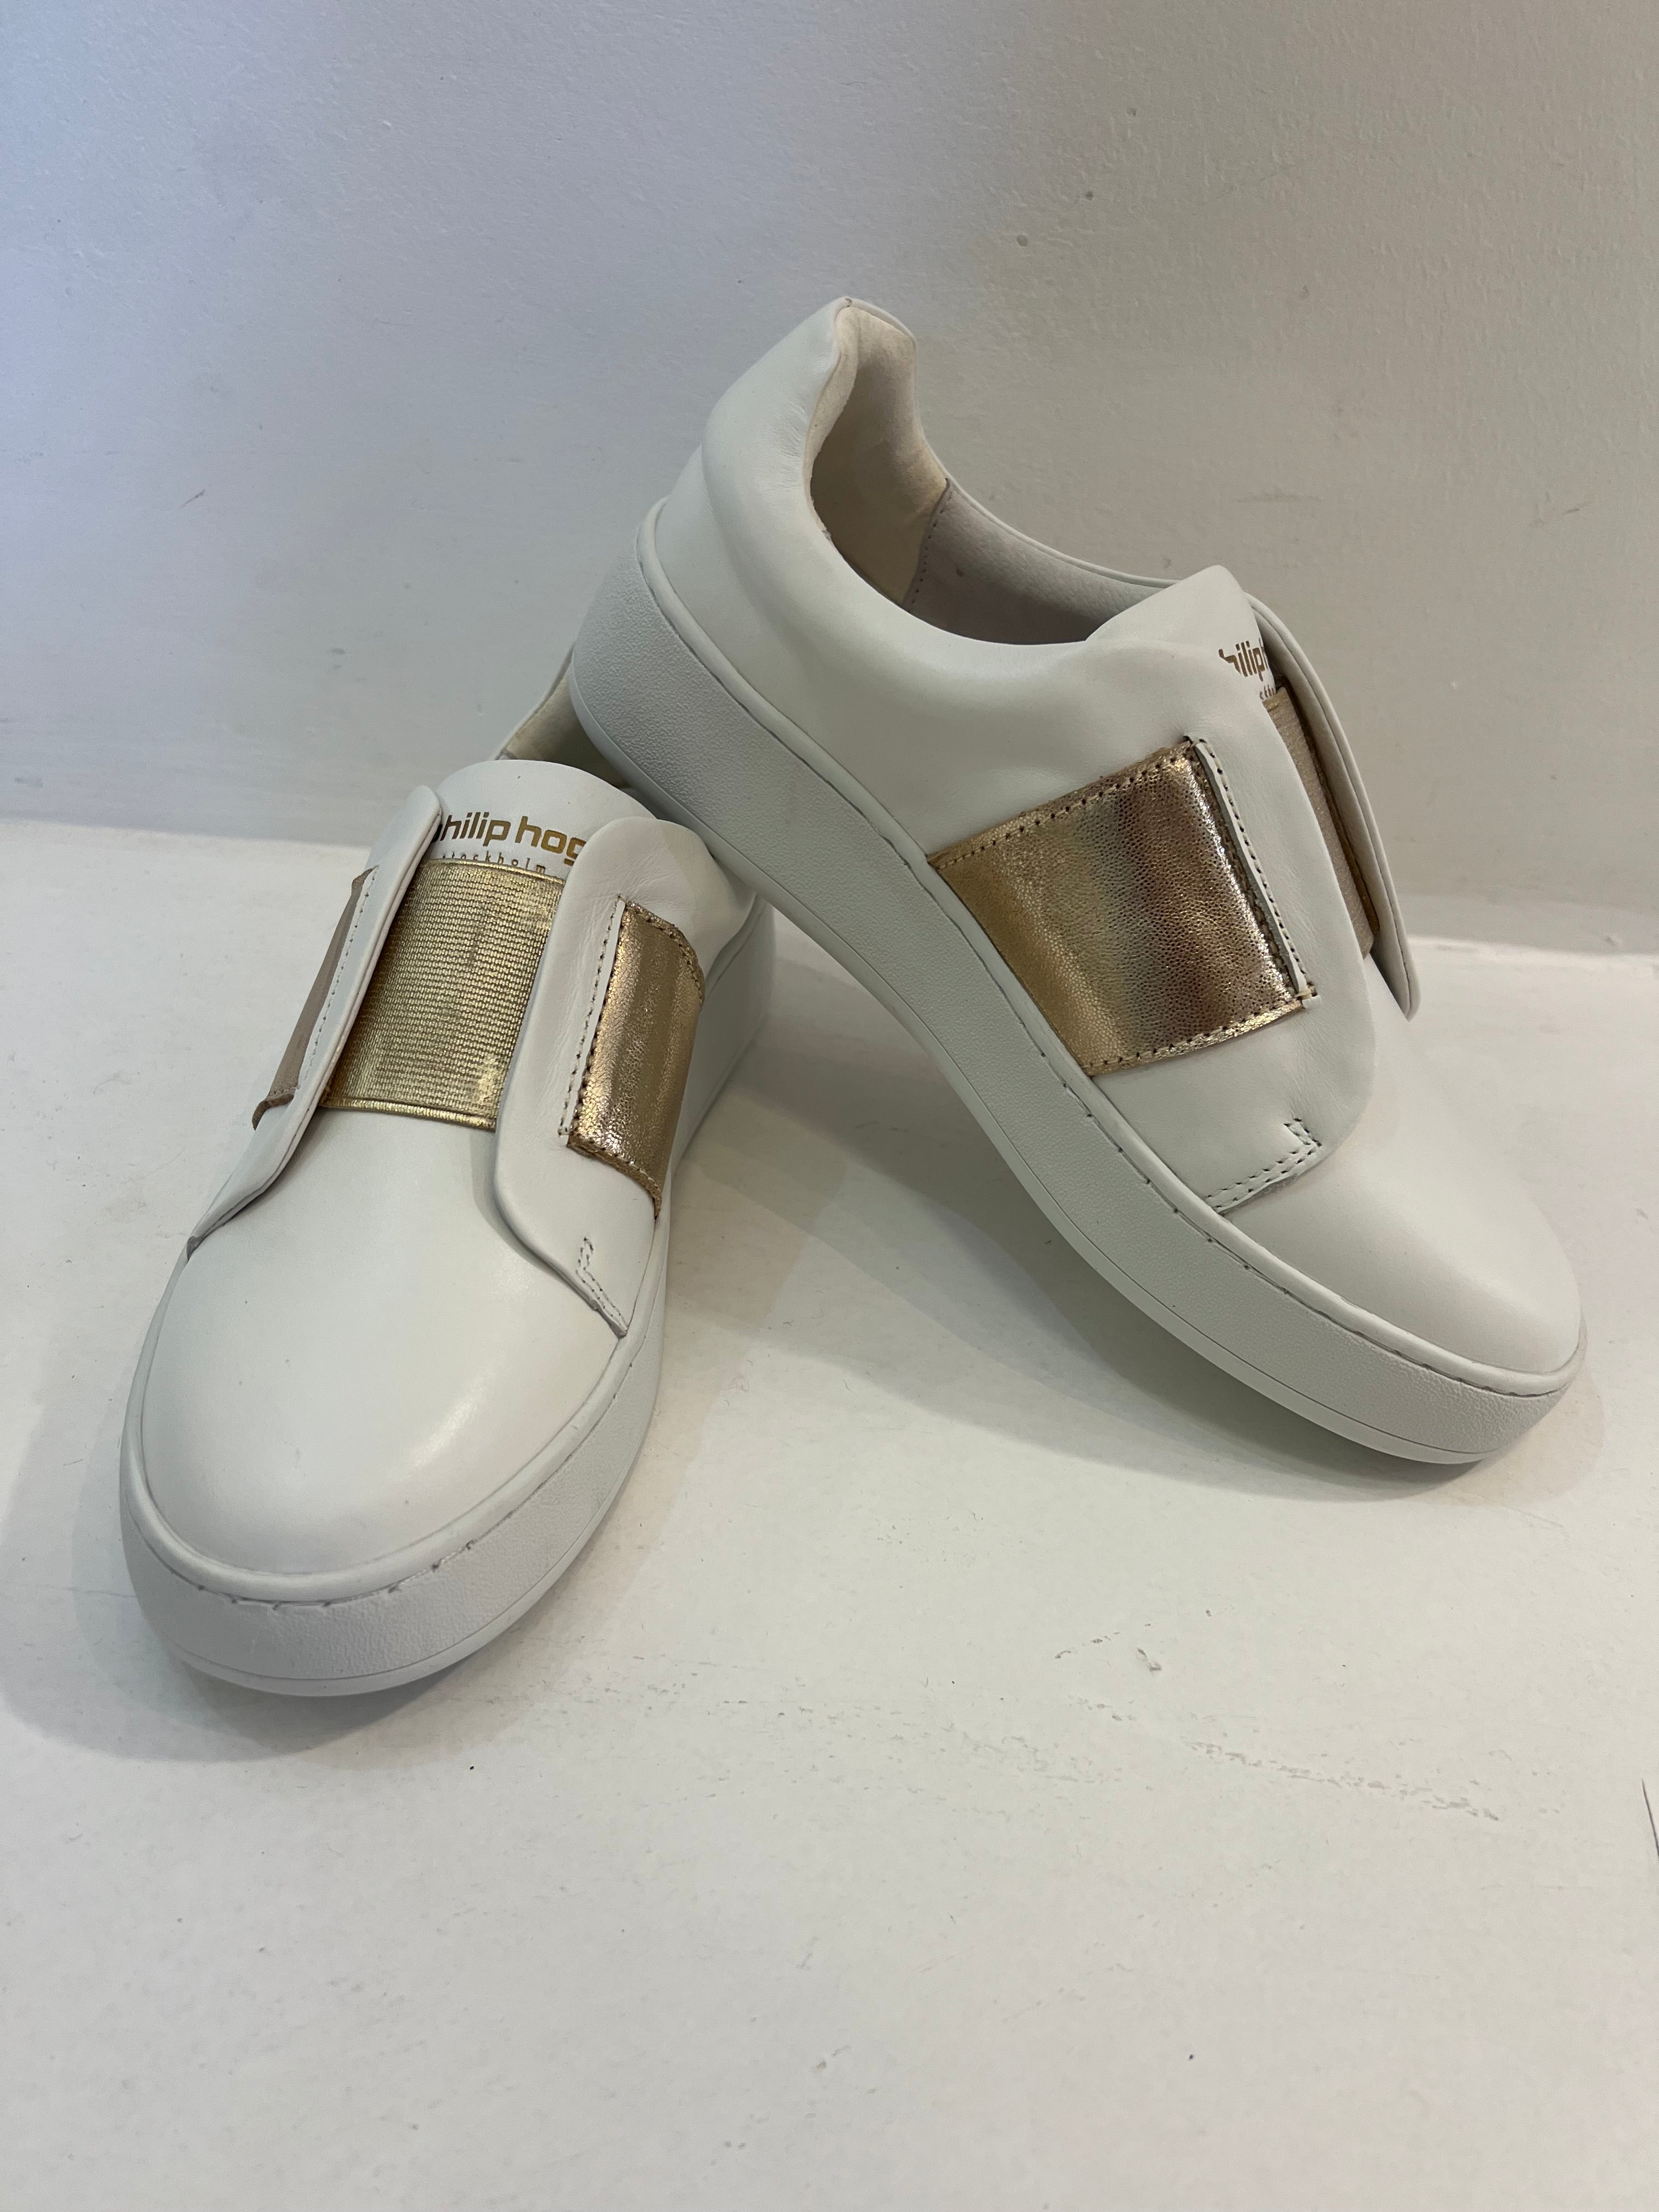 Hetre Alrefsord Hampshire Shoe Store Philip Hog Elastic White Gold Sneaker 